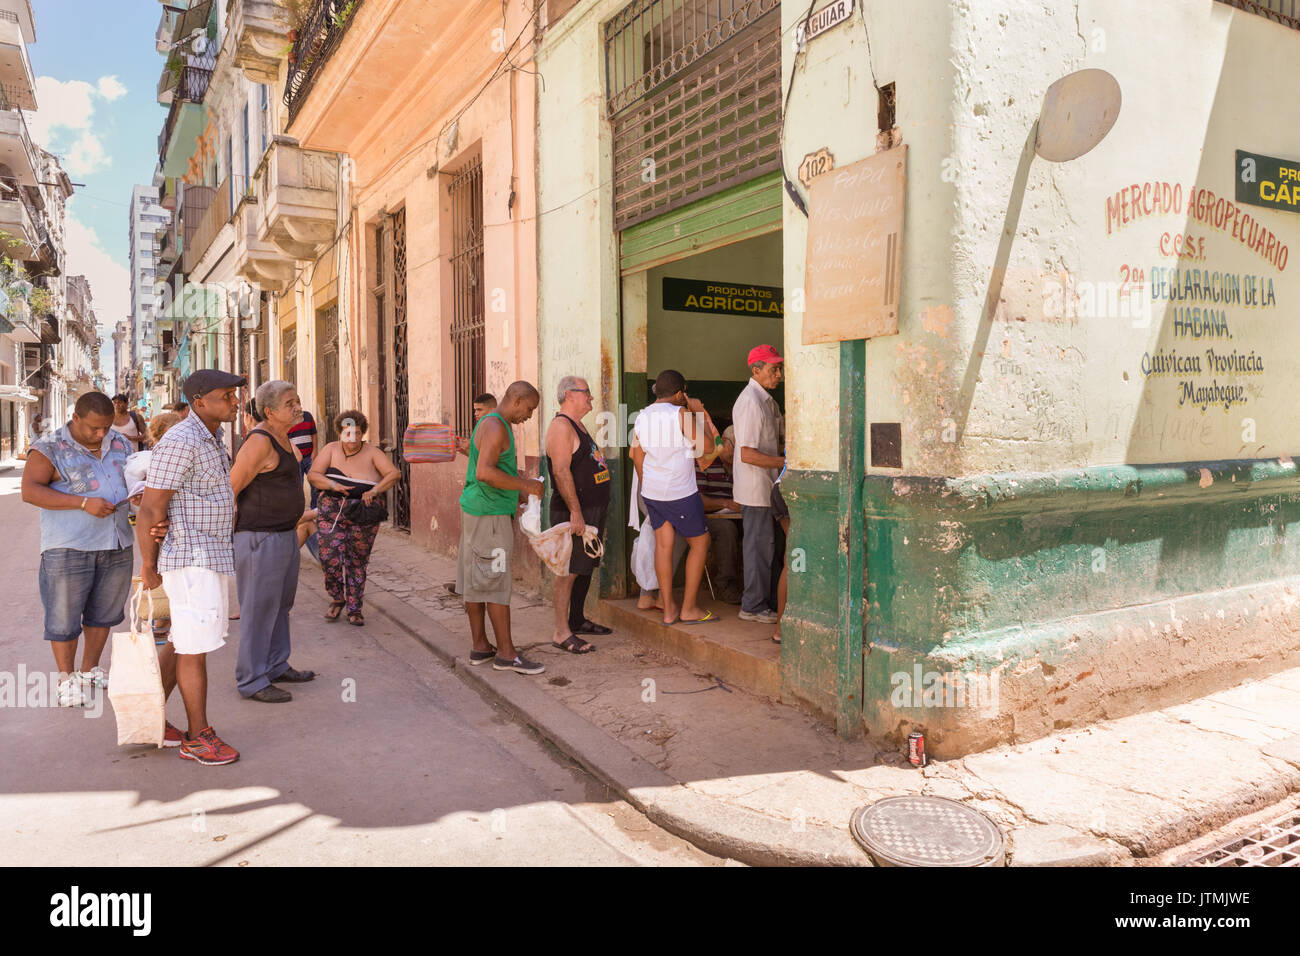 People in queue at a farmers market and food shop, Mercado Agropecuario, Havana, Cuba Stock Photo